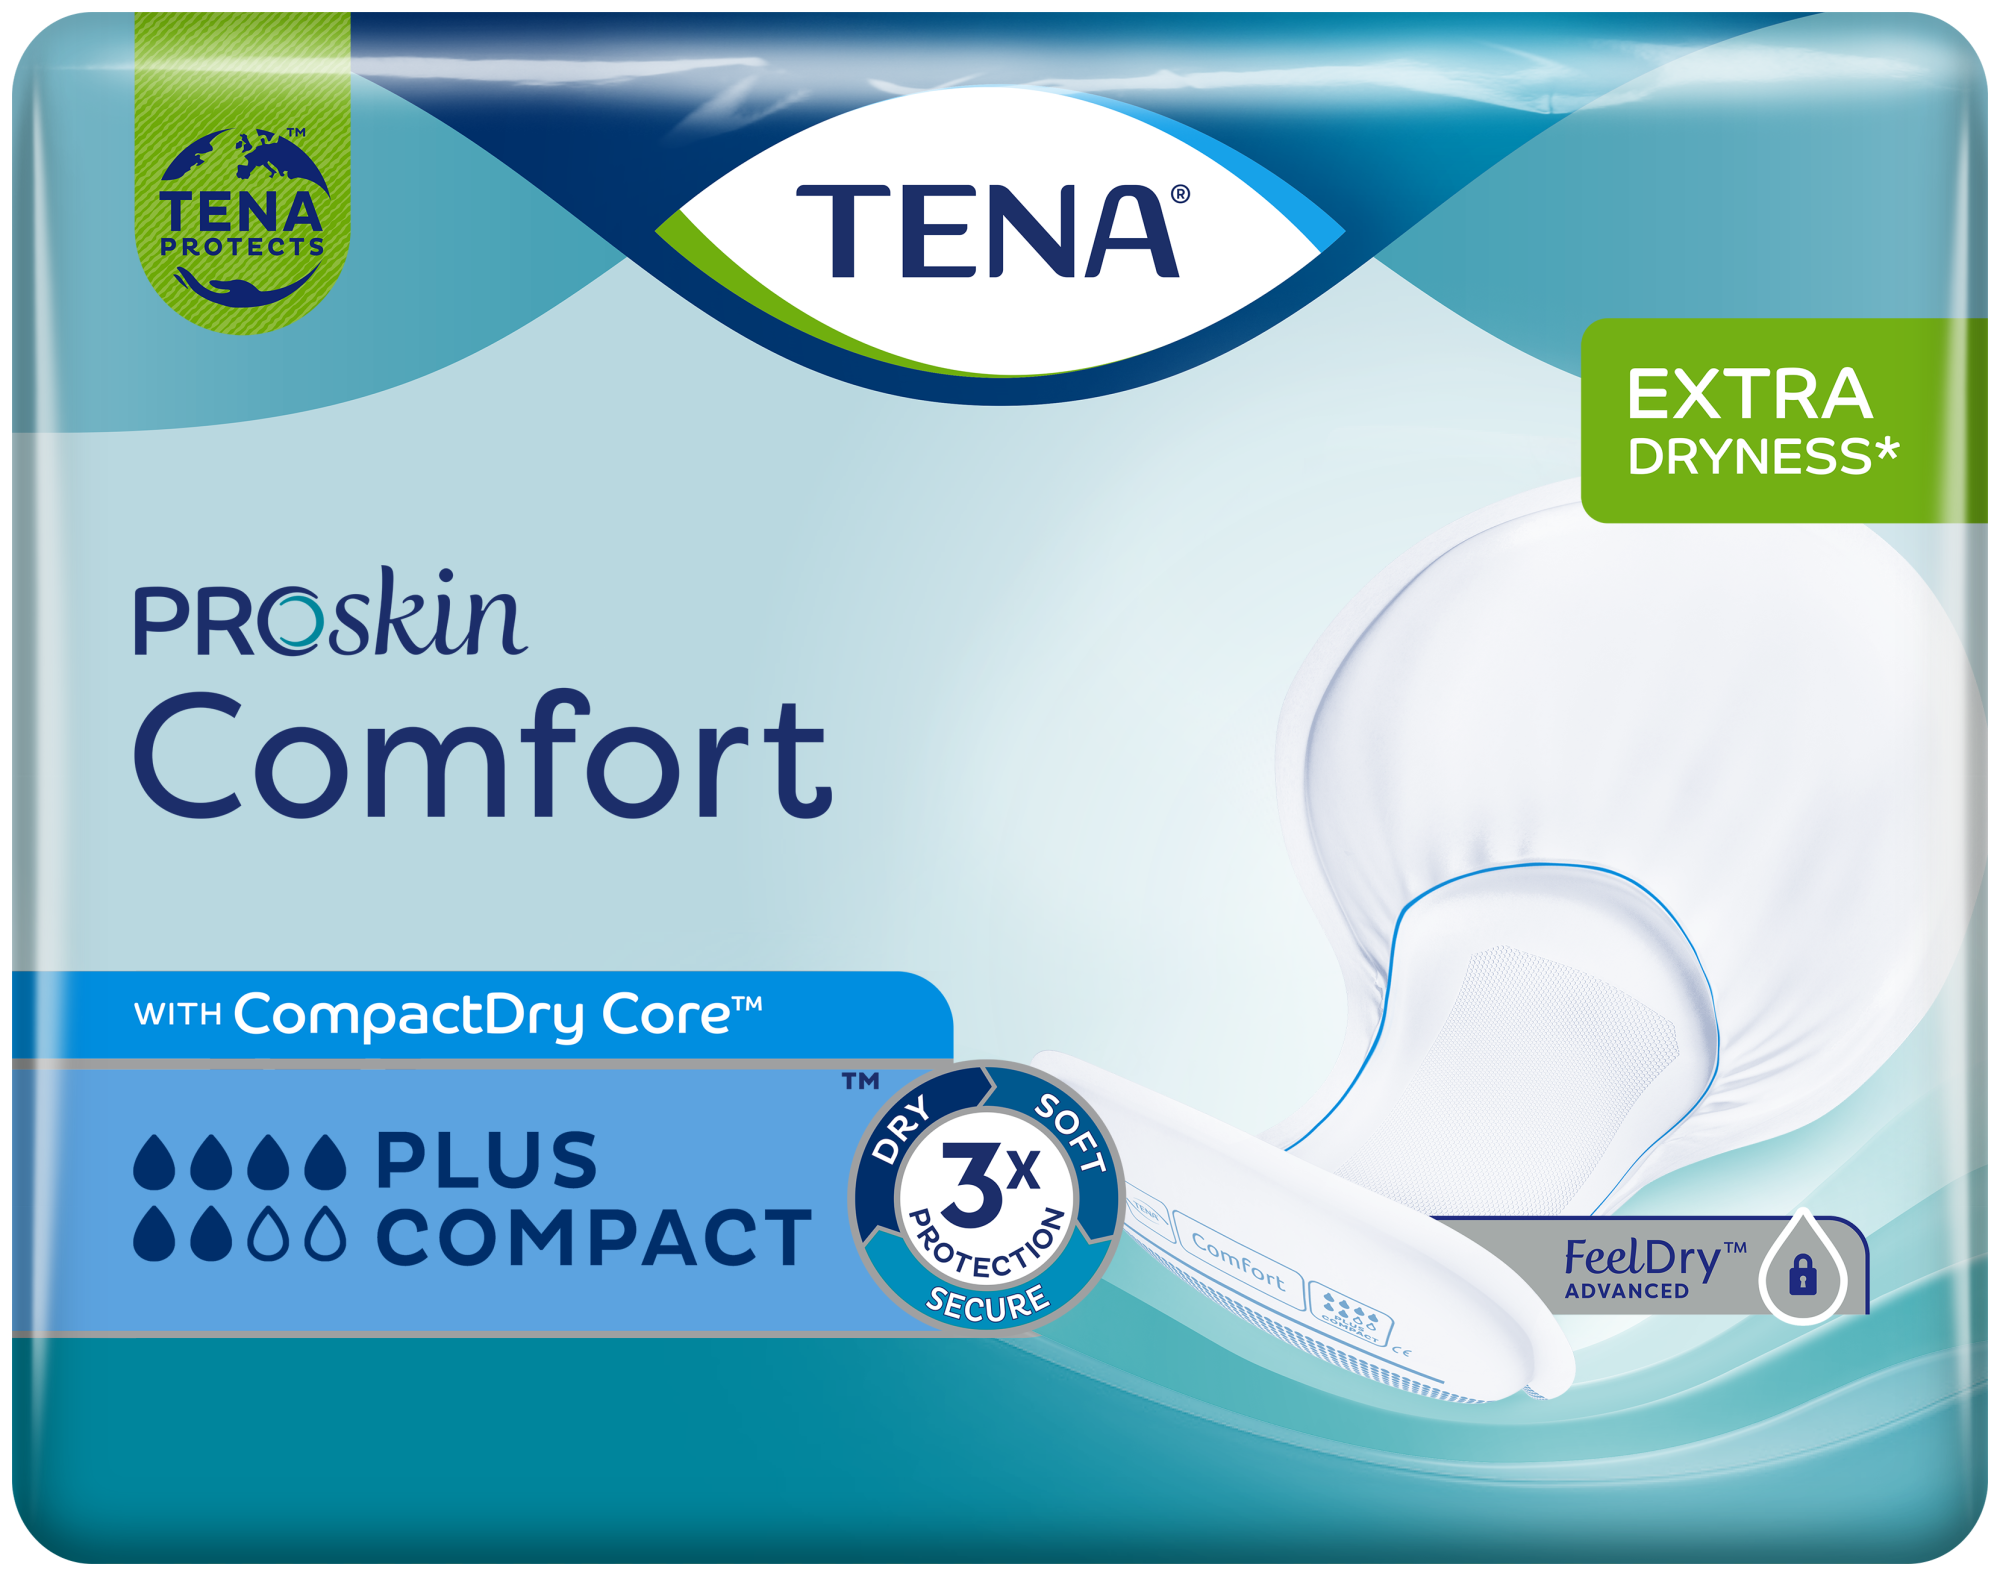 https://tena-images.essity.com/images-c5/627/397627/optimized-AzurePNG2K/tena-proskin-comfort-plus-compact-beauty-2.png